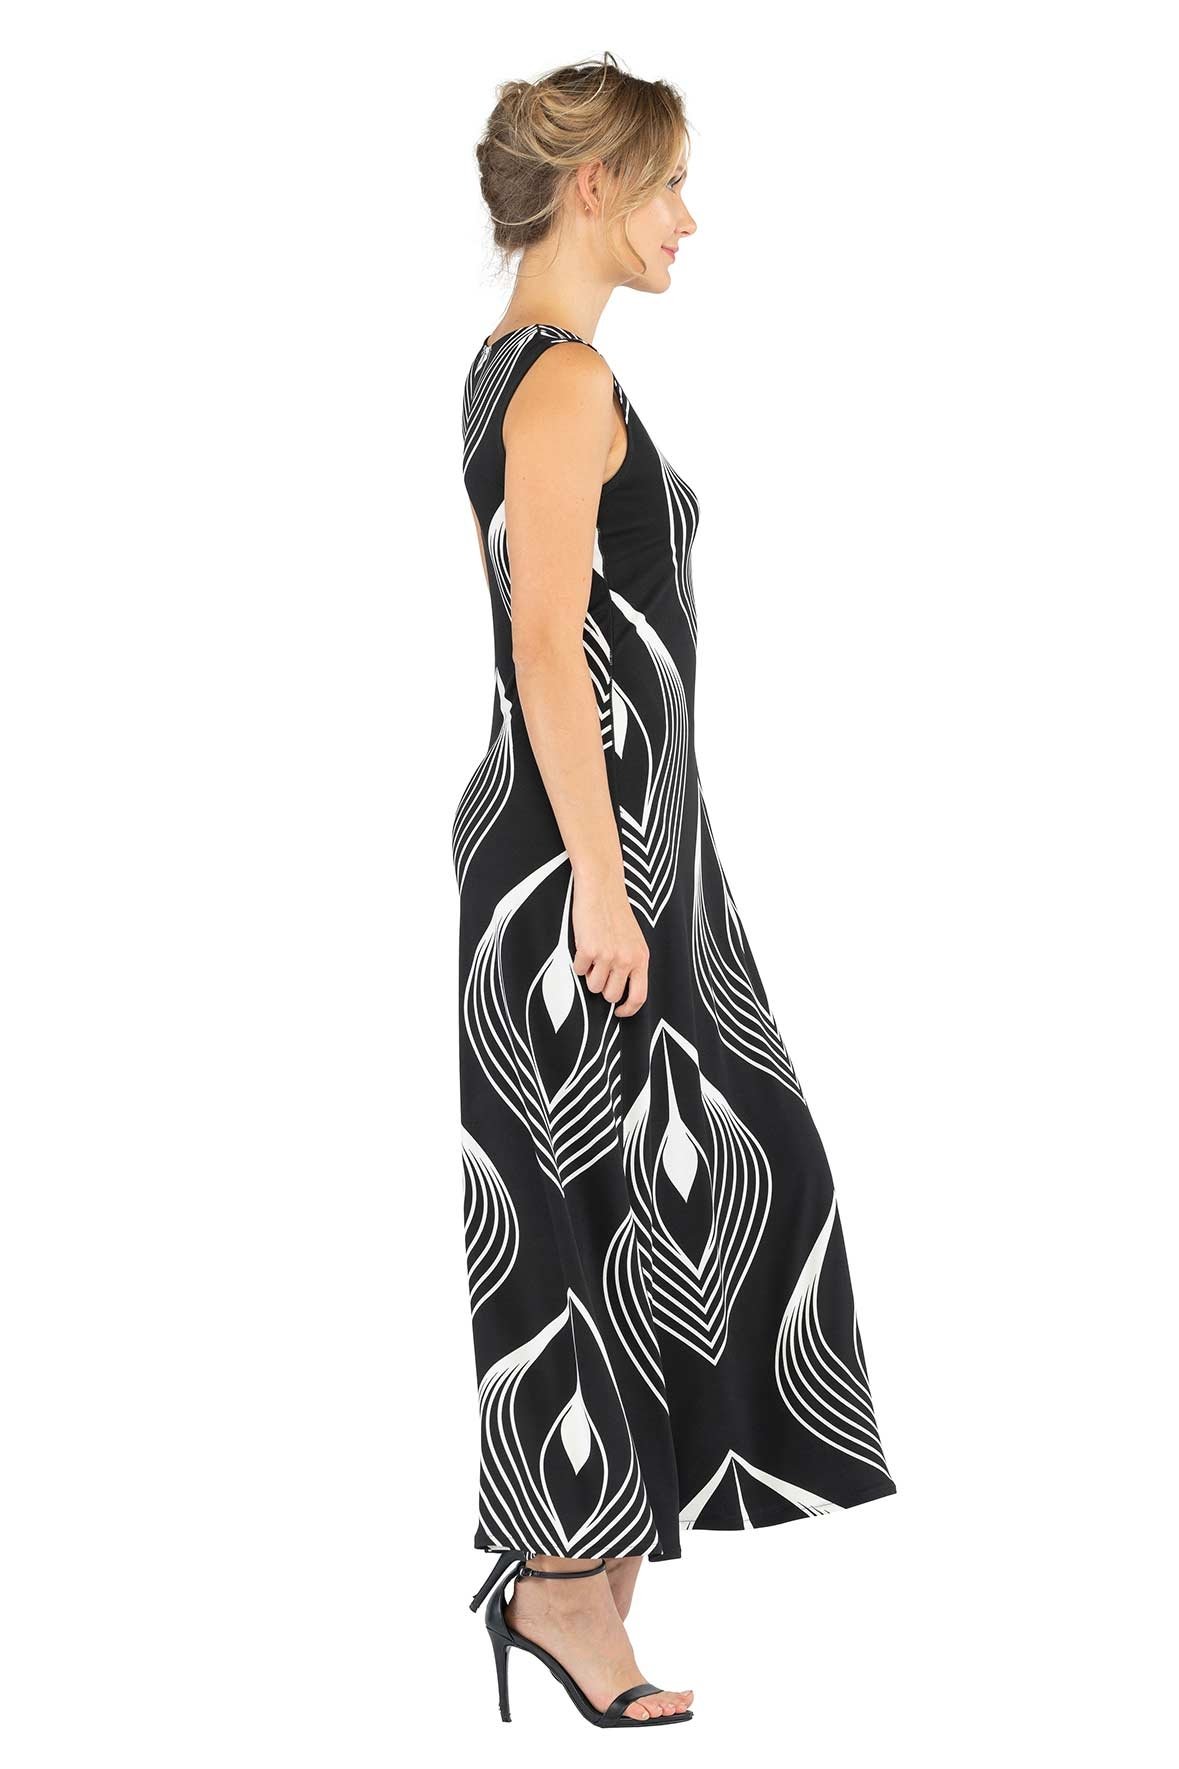 Eva Varro D12898C Sleeveless Maxi Dress| Ooh Ooh Shoes women's clothing and shoe boutique naples, charleston and mashpee